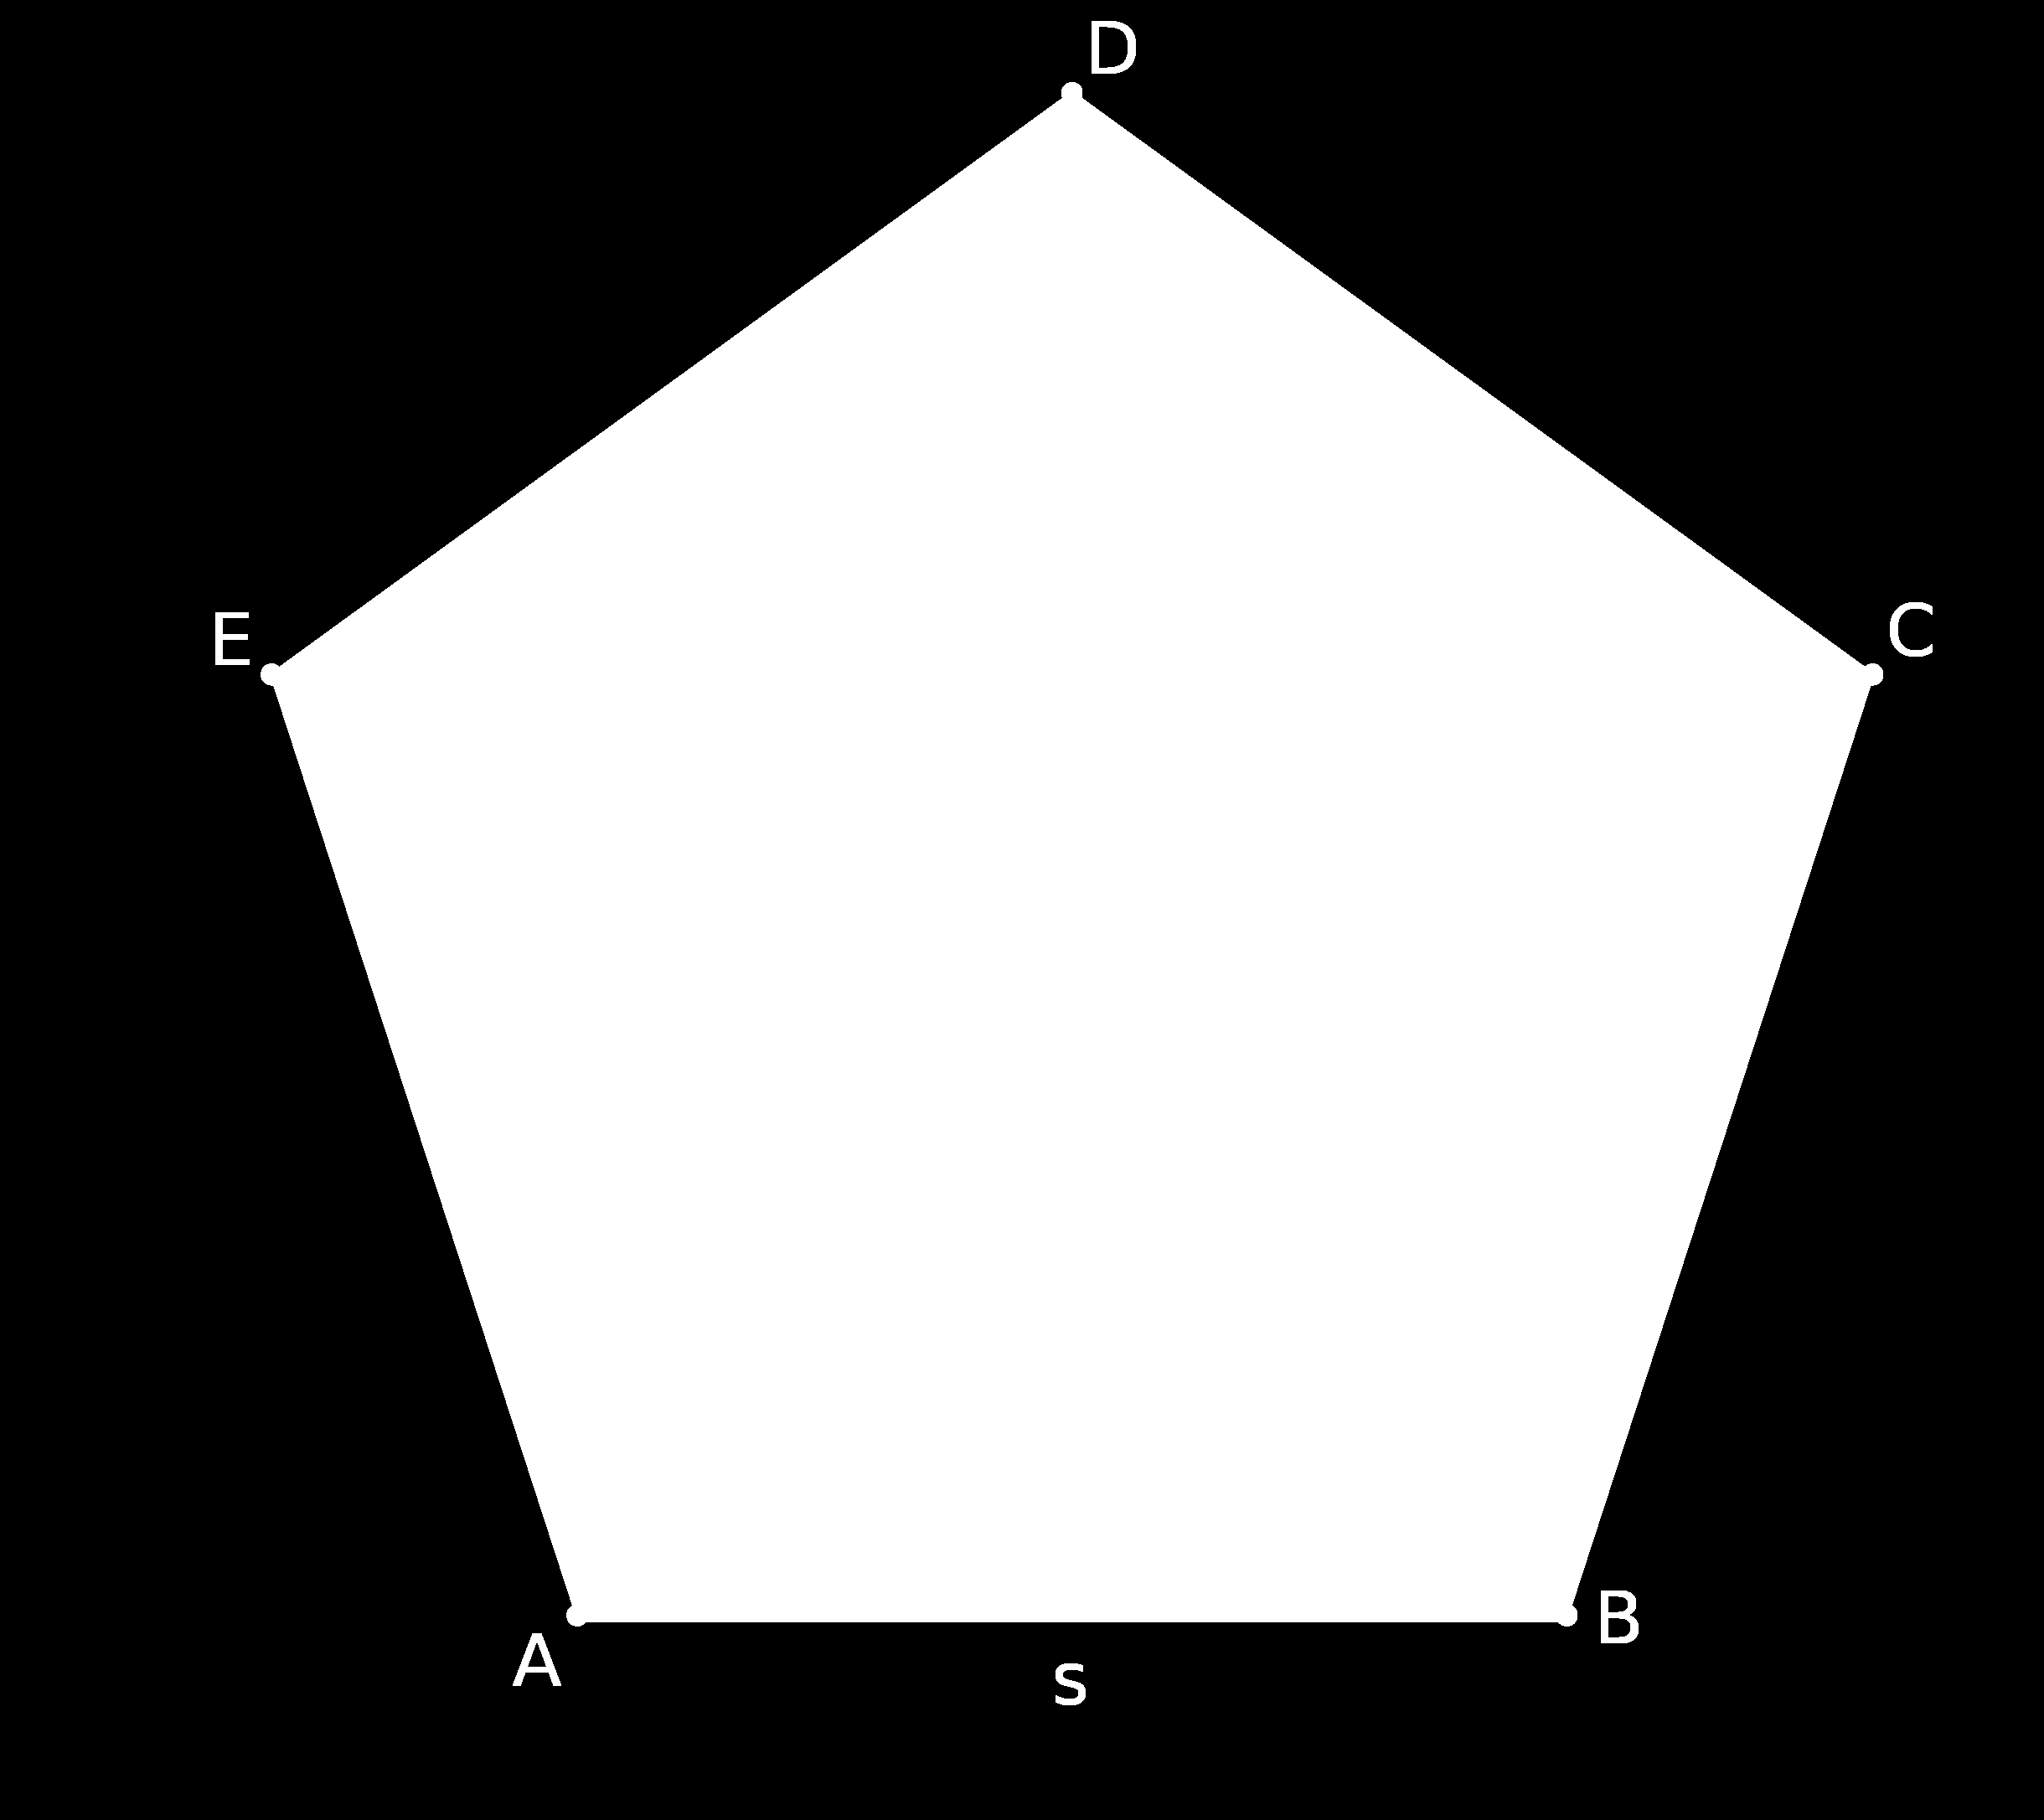 Beweis. Behauptung: (DAE) = (CAD) = (BAC) = 36 Abbildung 1.3: reguläres Fünfeck - Pentagramm Wir wissen, dass (DEA) = 108. Da das Dreieck gleichschenklig ist, folgt (DAE) = 180 108 2 = 36.